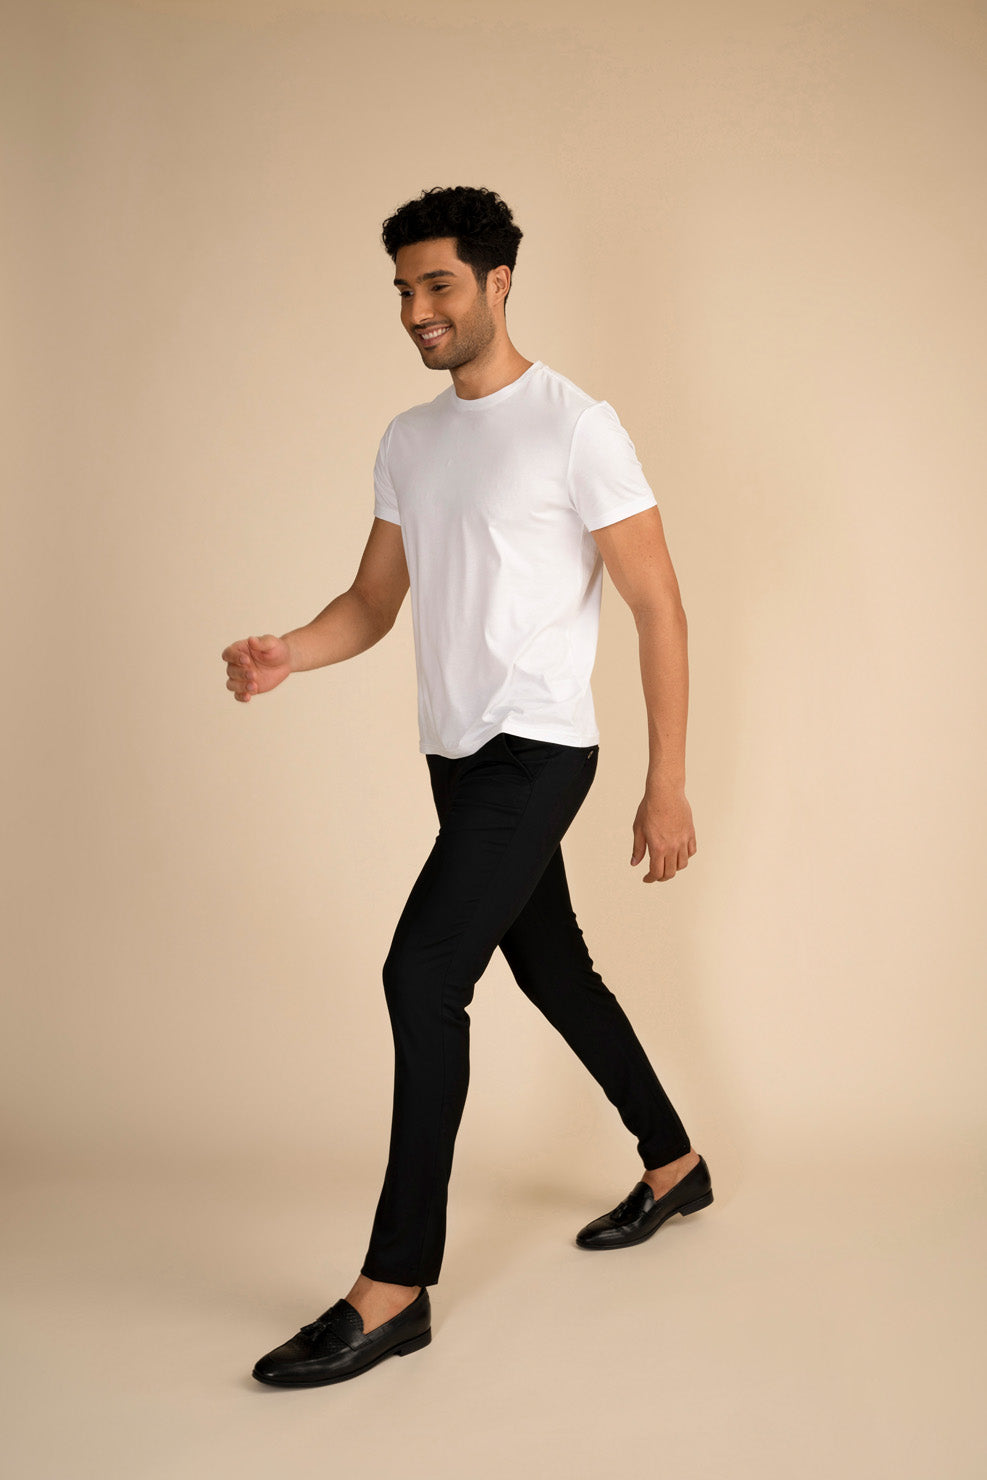 Black 4-Way Stretch Flex Pro Pants